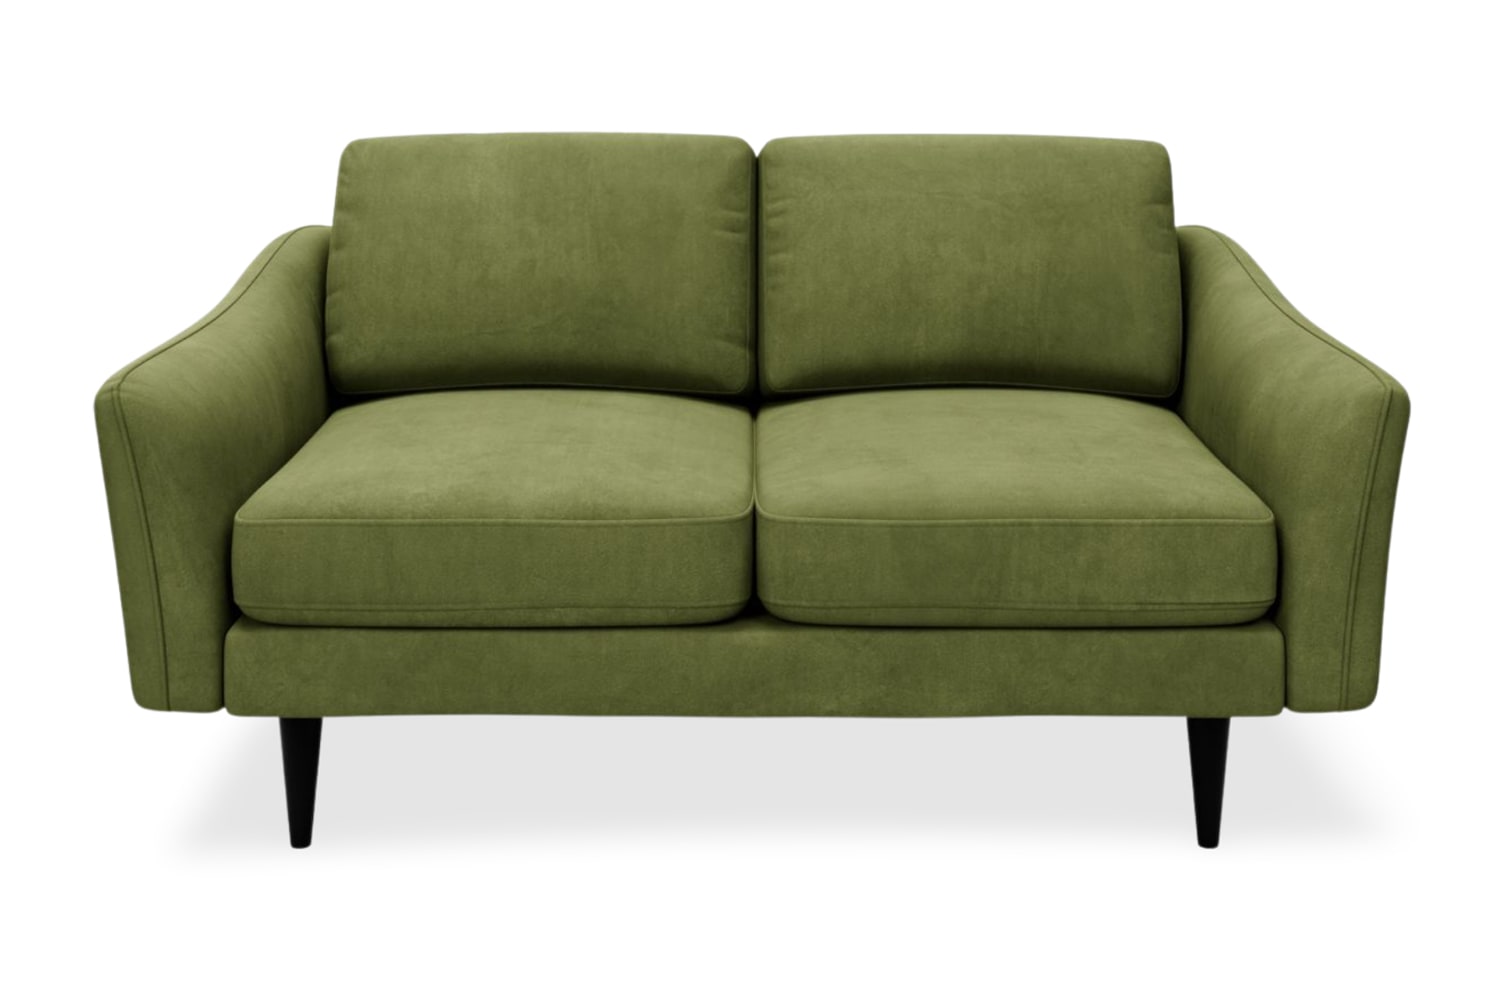 SNUG | The Rebel 2 Seater Sofa in Olive variant_40414889836592